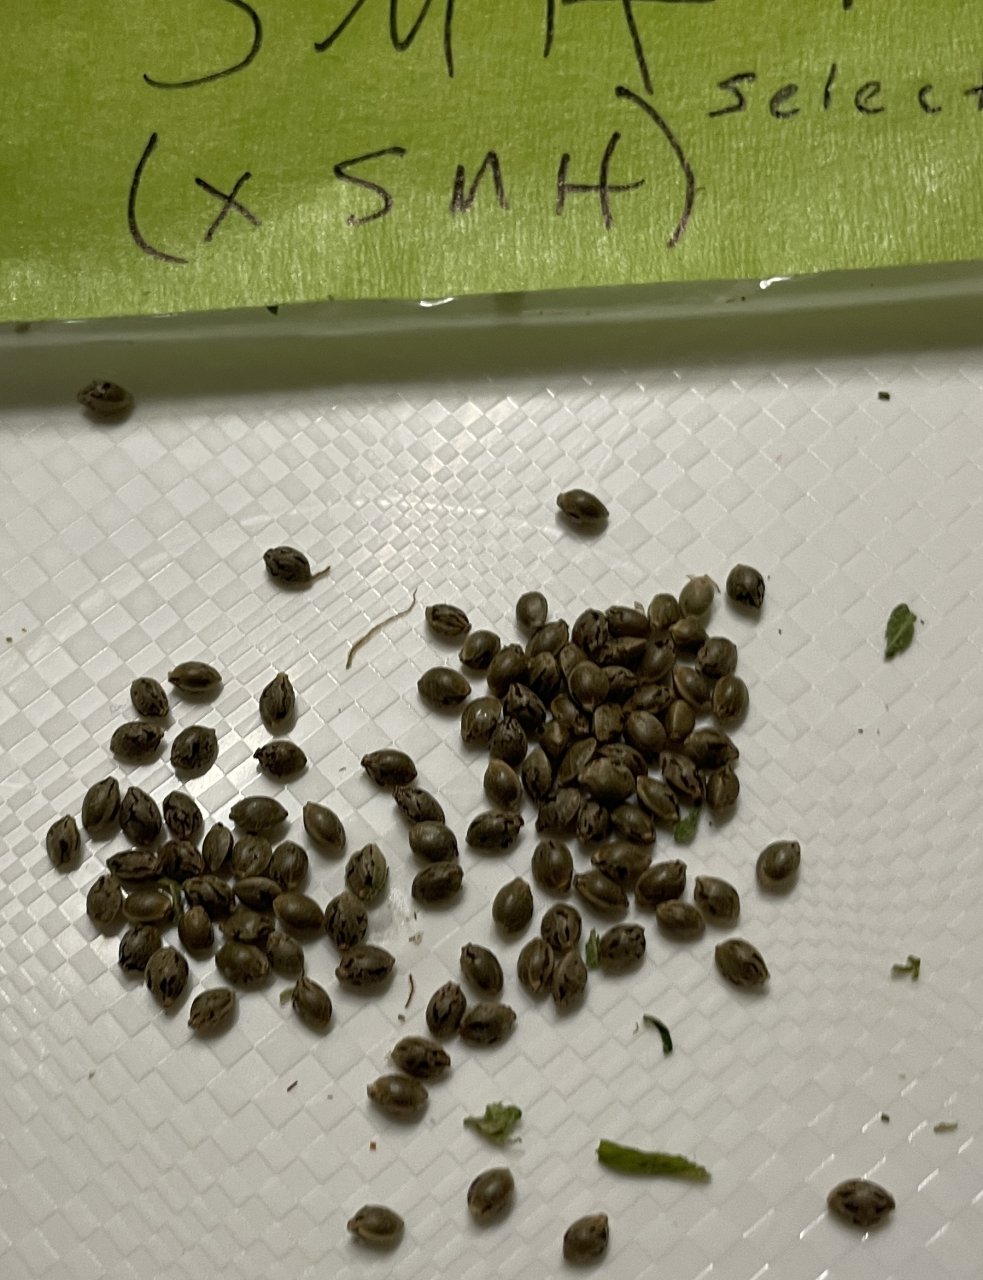 SMH x SMH select pollinated seeds.jpg